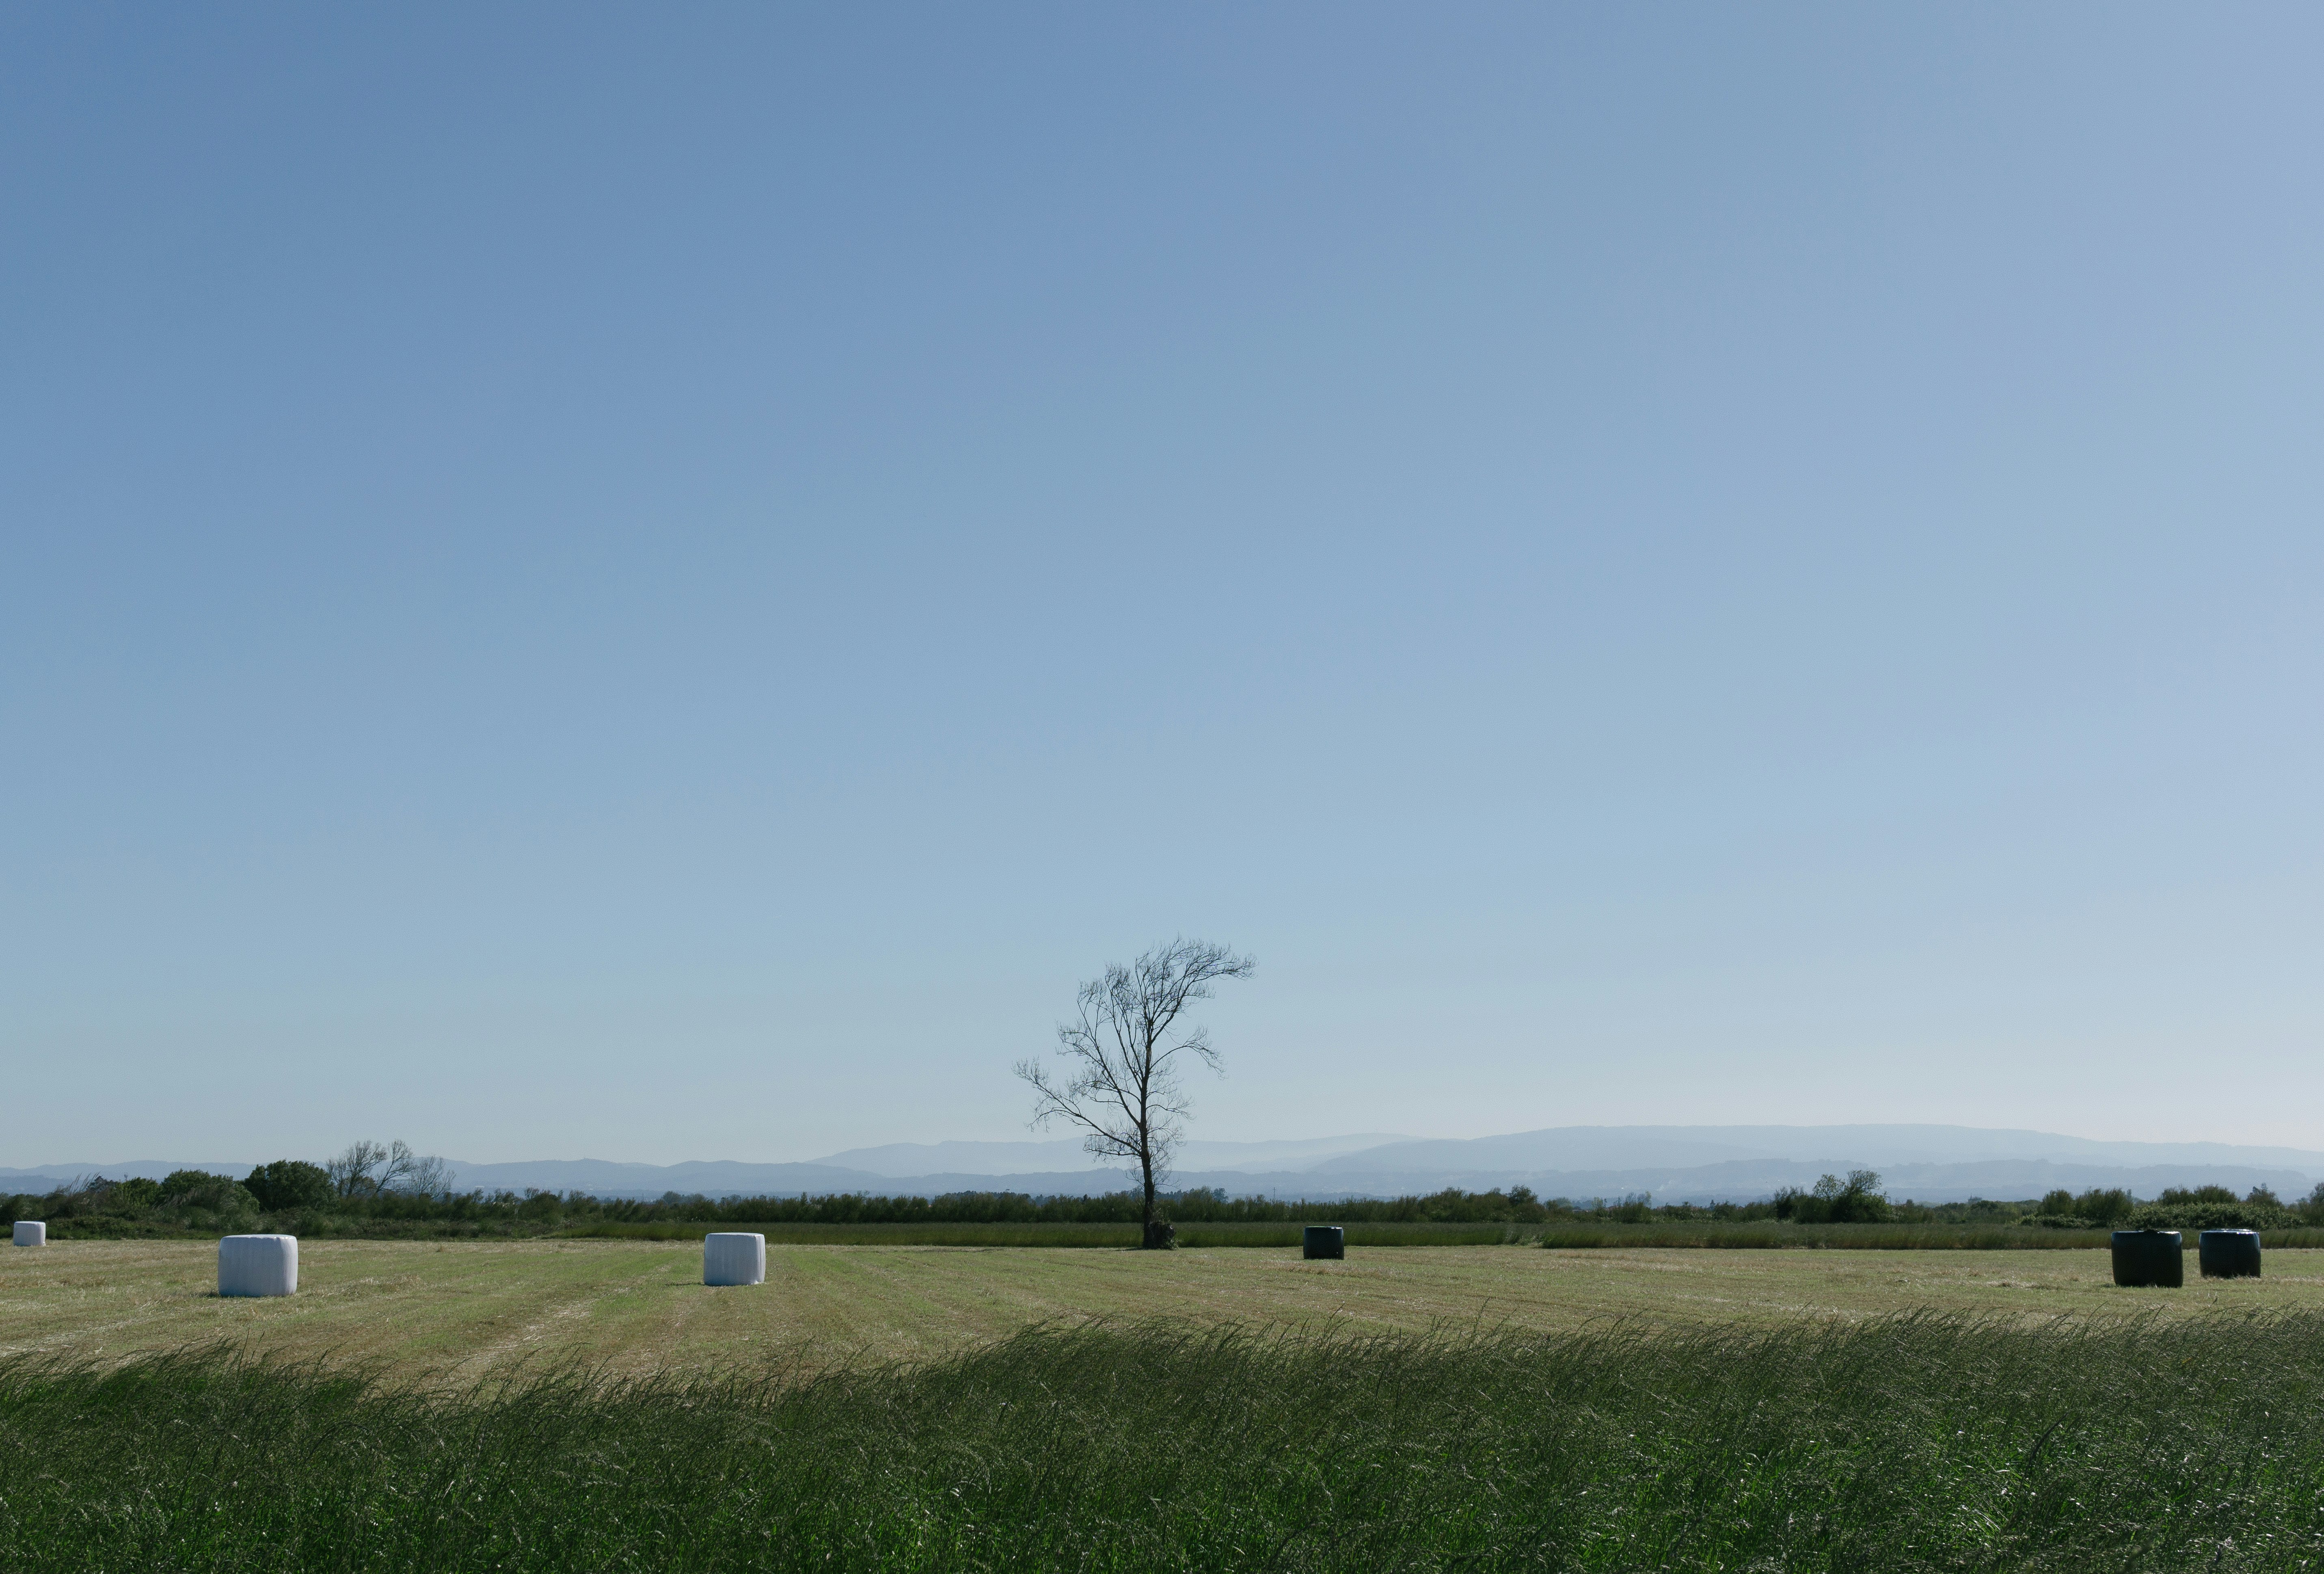 vast pasture under blue sky during daytime